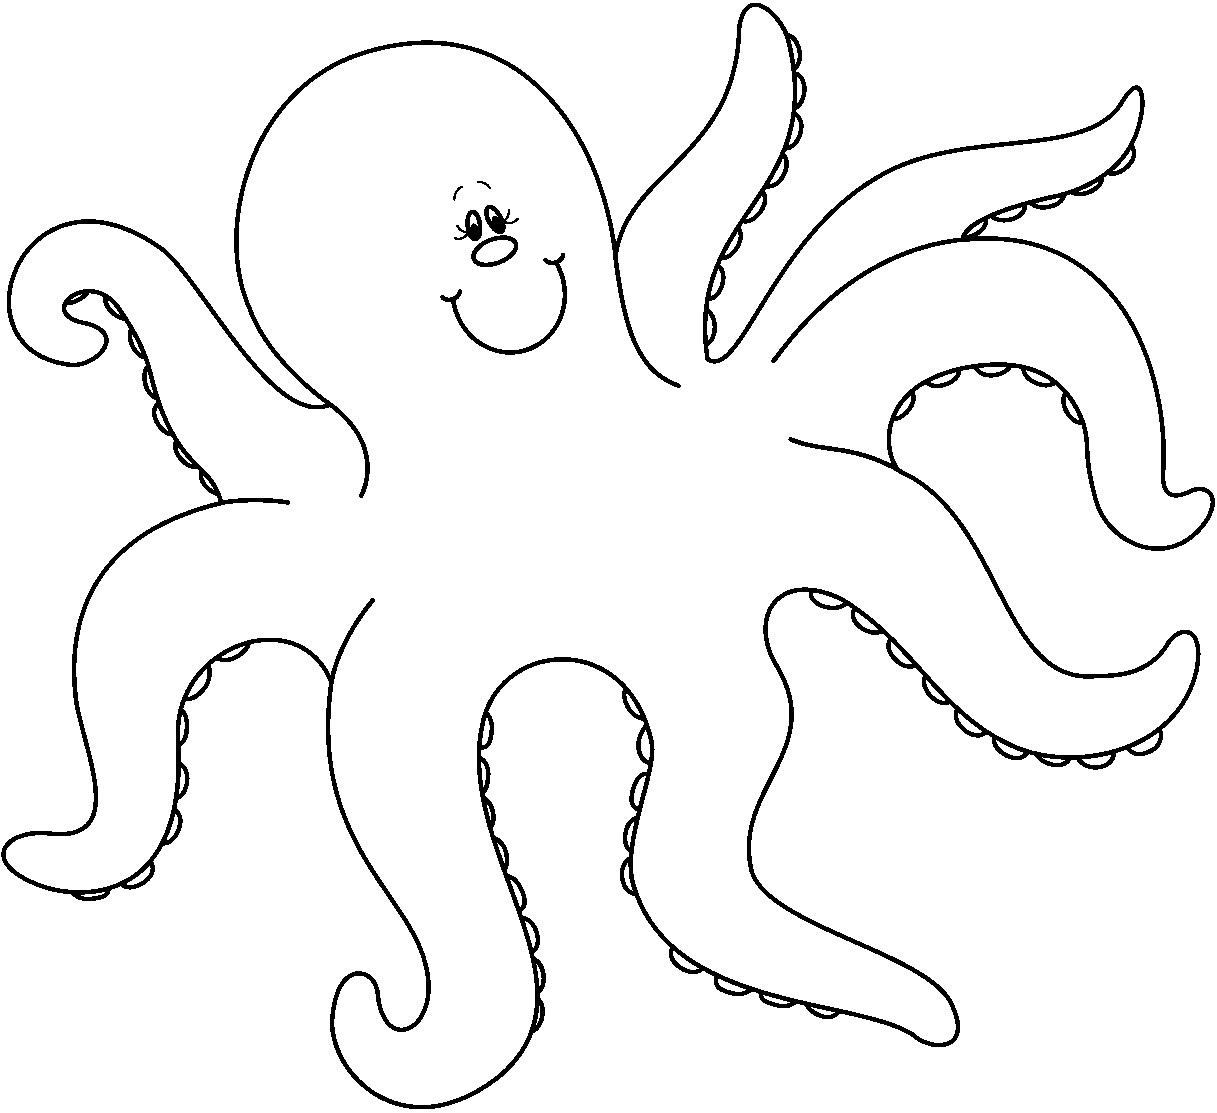 Octopus silhouette octopus clip art images stock photos